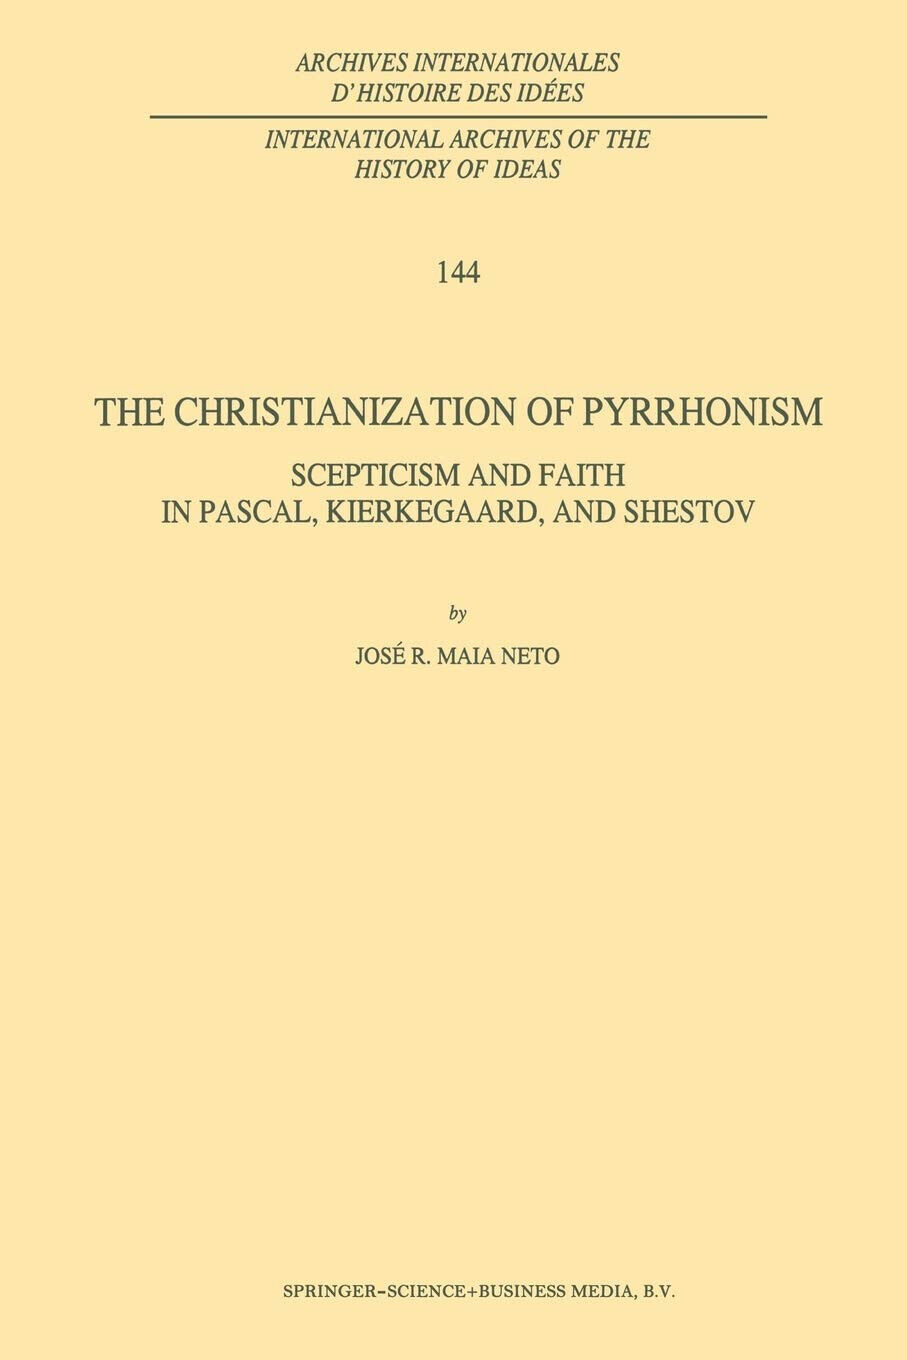 The Christianization of Pyrrhonism - J. R. Maia Neto - Springer, 2013